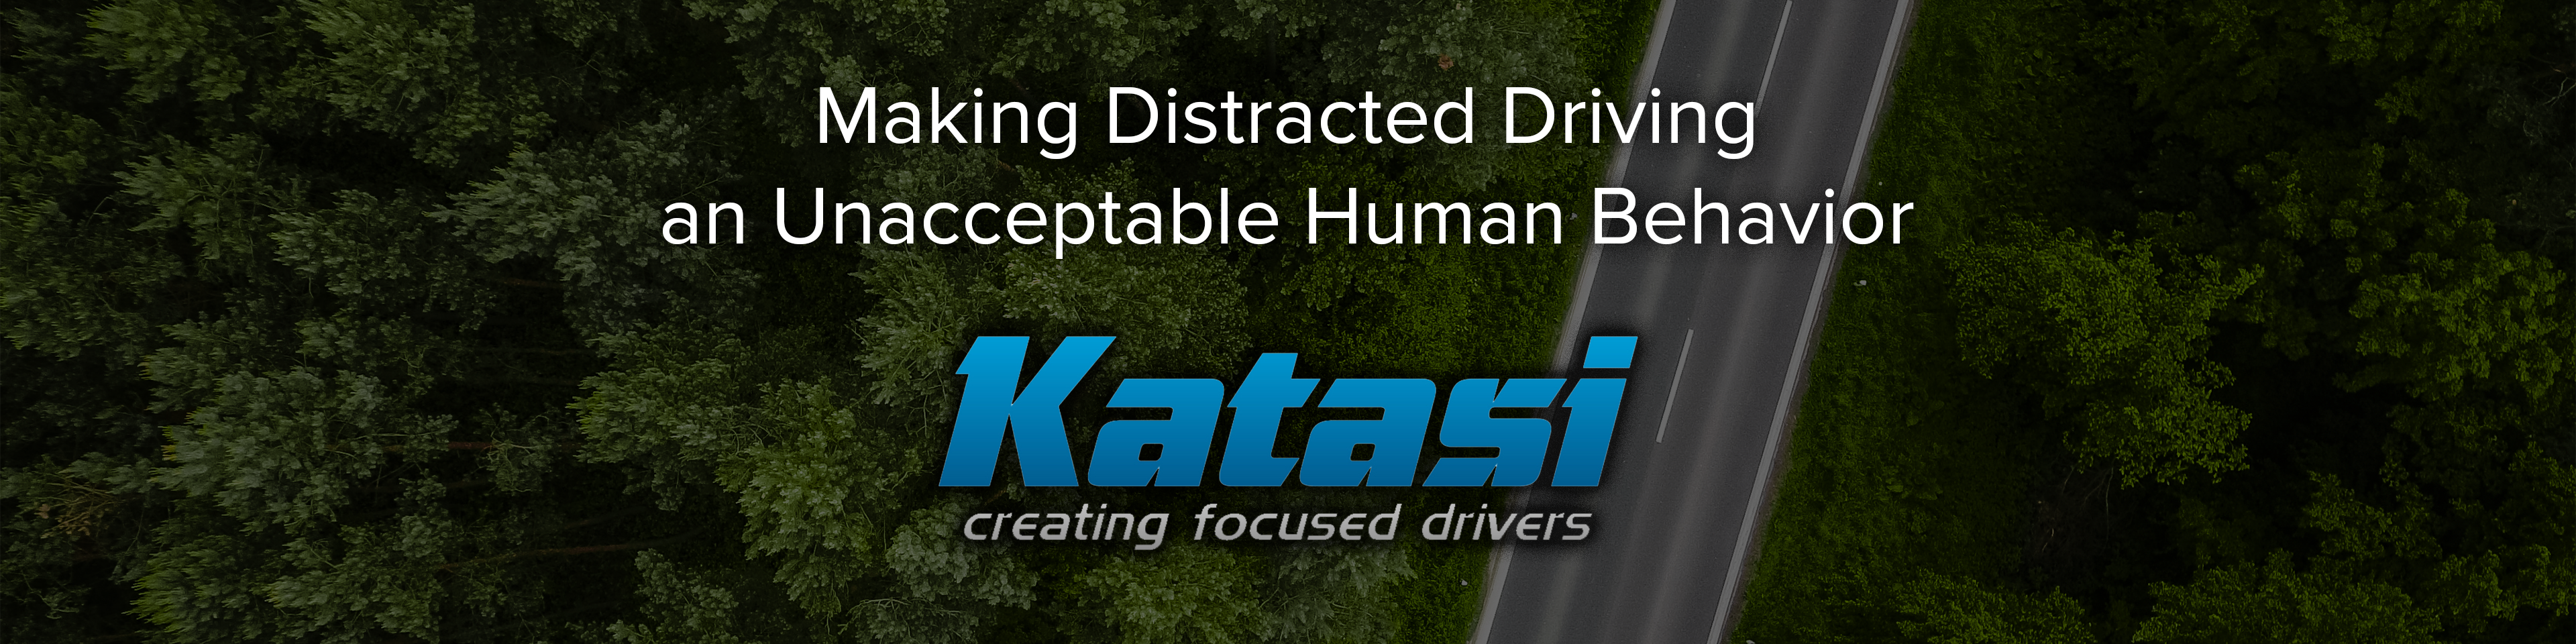 Making Distracted Driving an Unacceptable Human Behavior